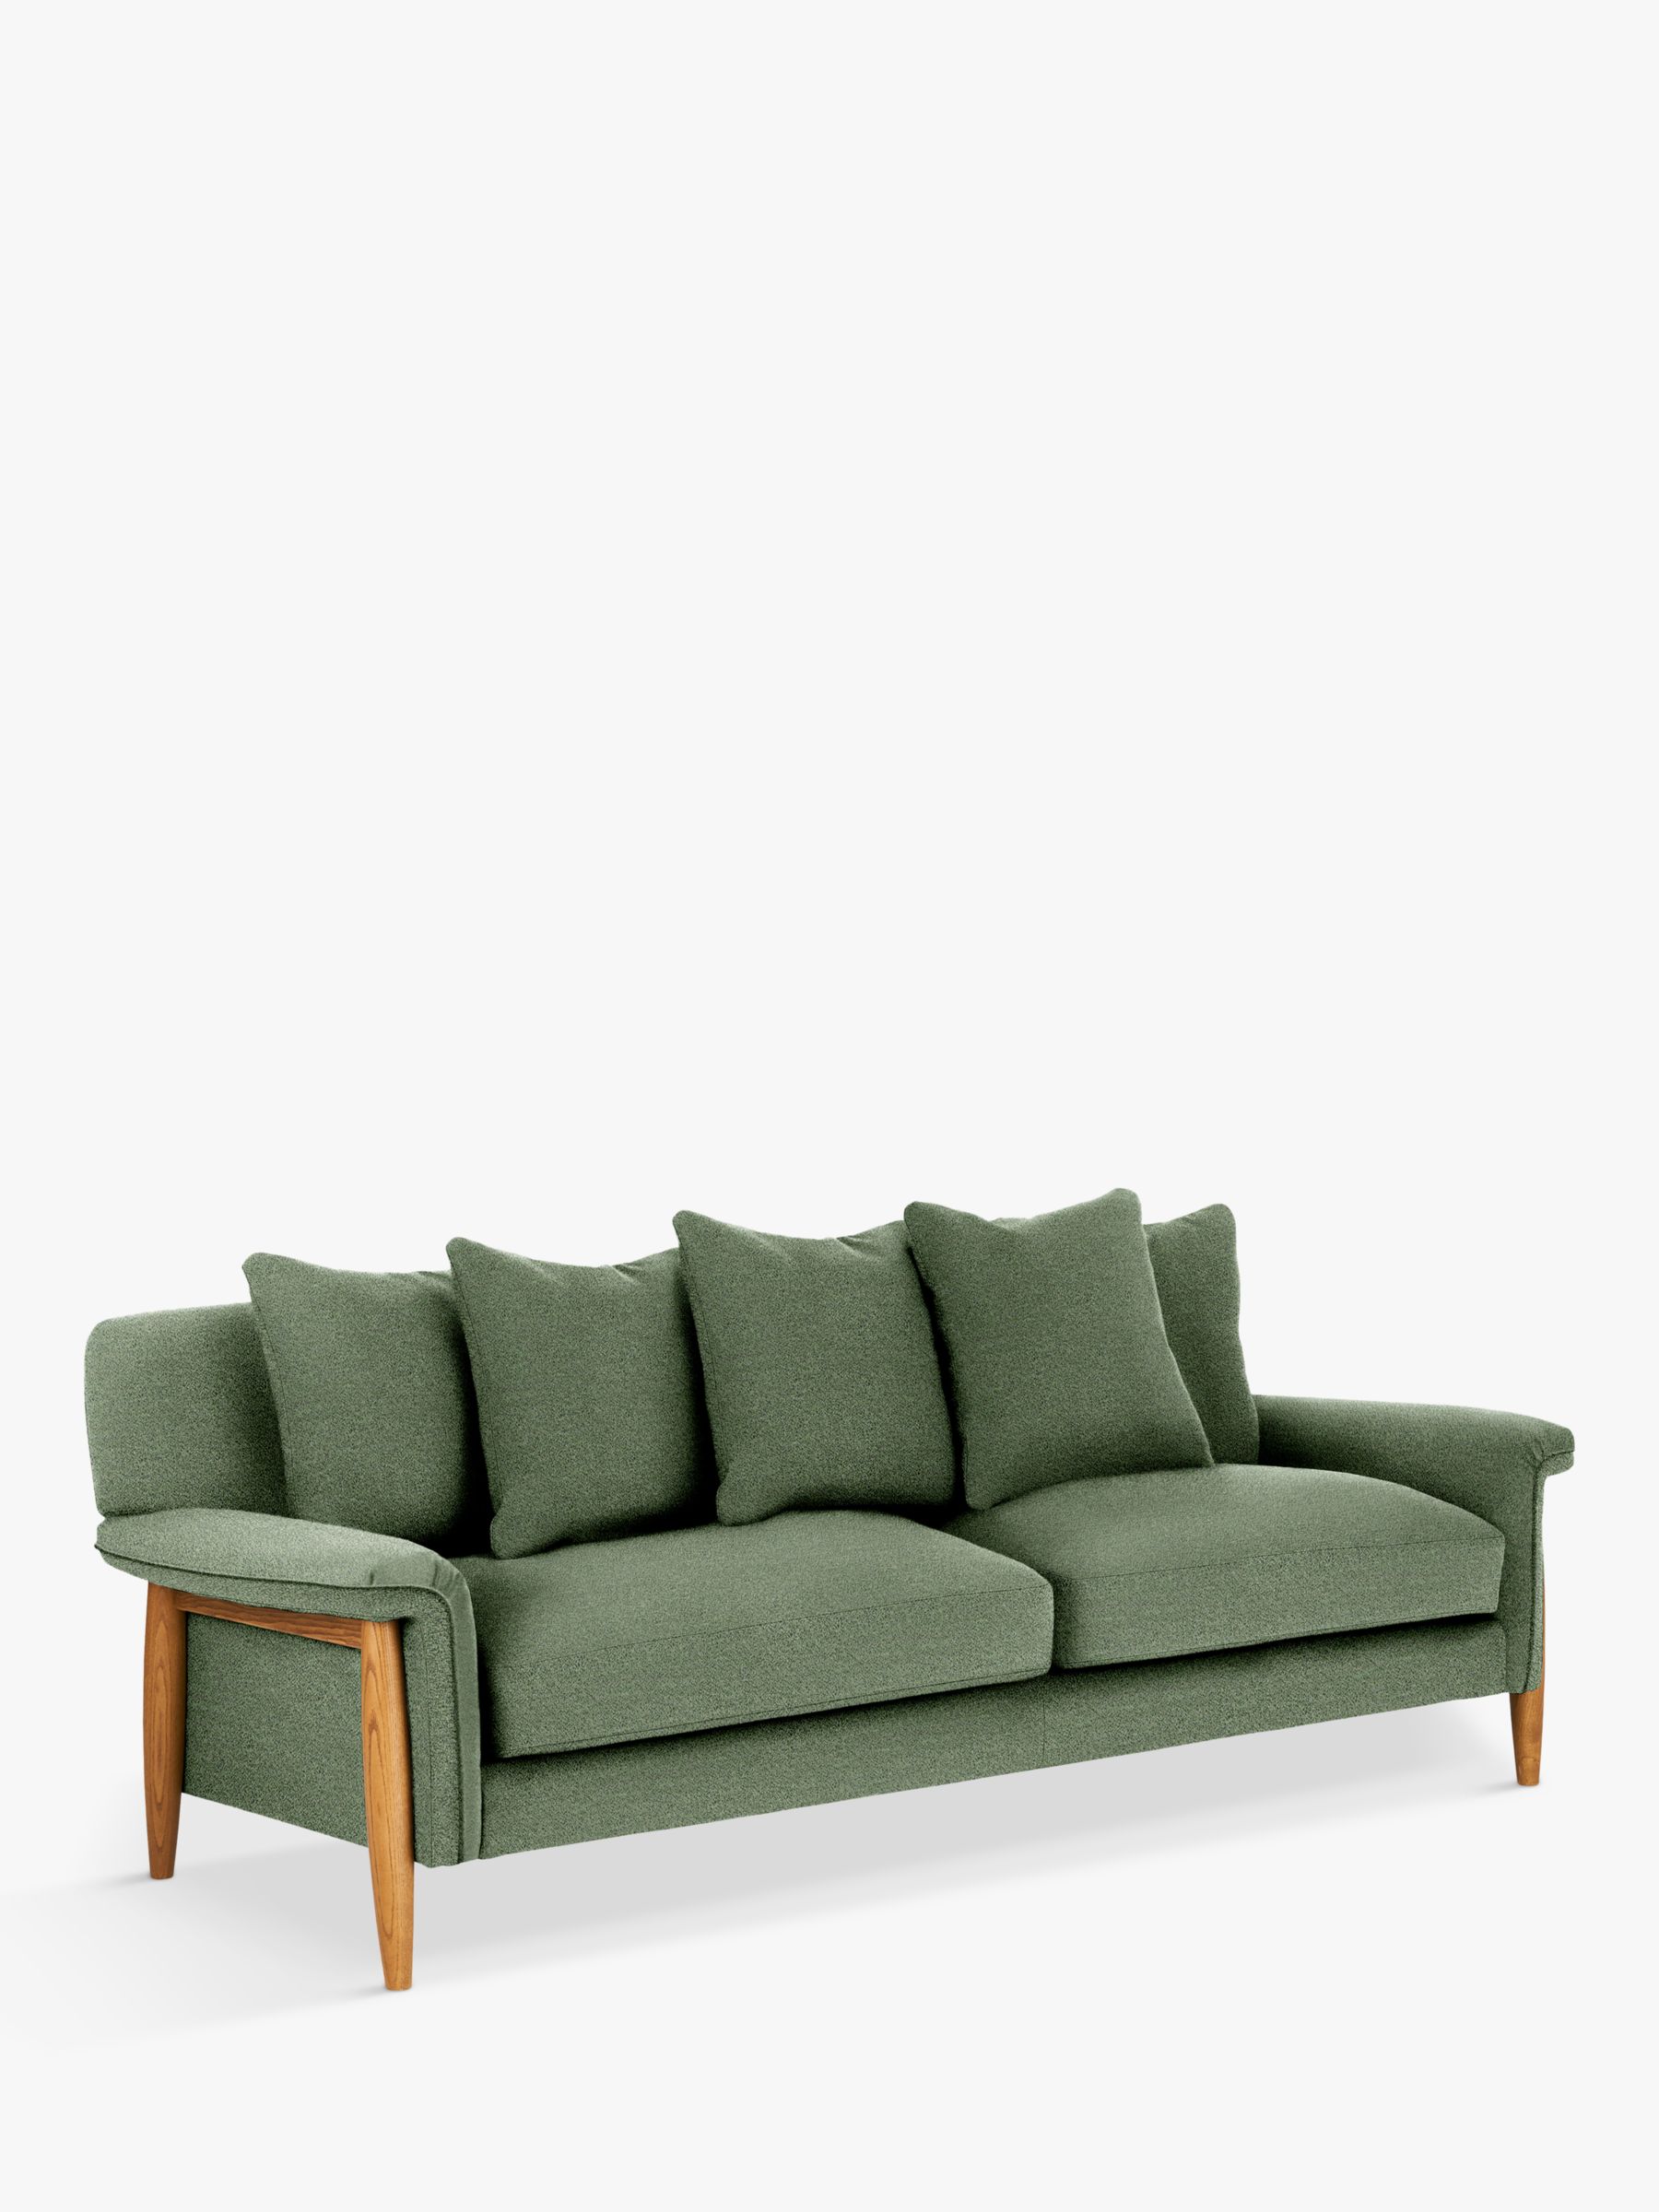 Sorrento Range, ercol for John Lewis Sorrento Large 3-Seater Sofa, Vintage Ash Leg, Boucle Green